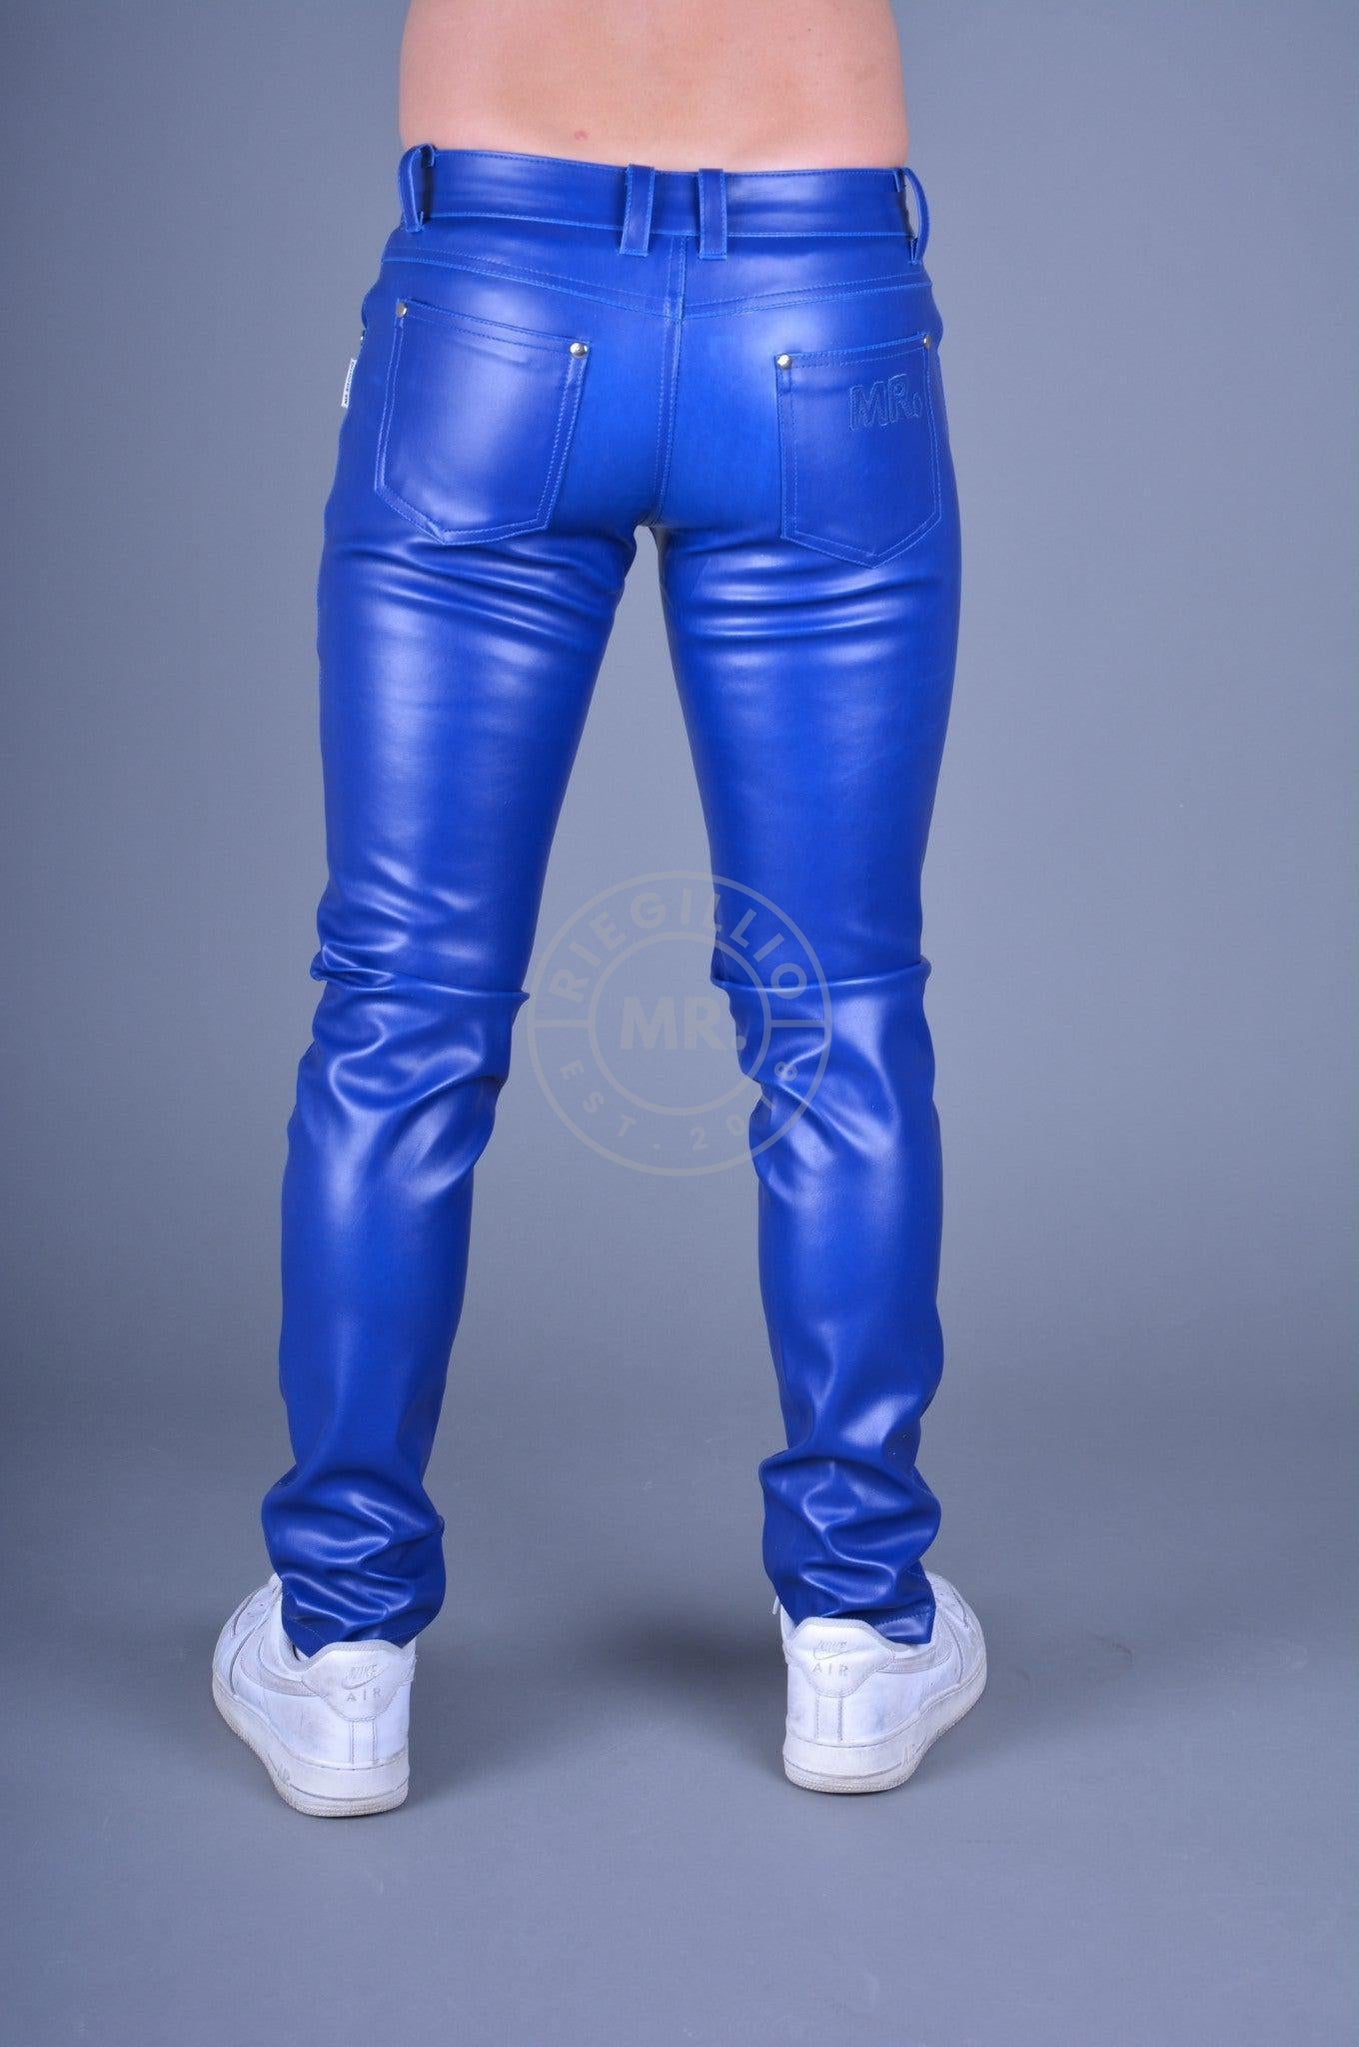 MR. 5-Pocket Pants Blue *DISCONTINUED ITEM* at MR. Riegillio